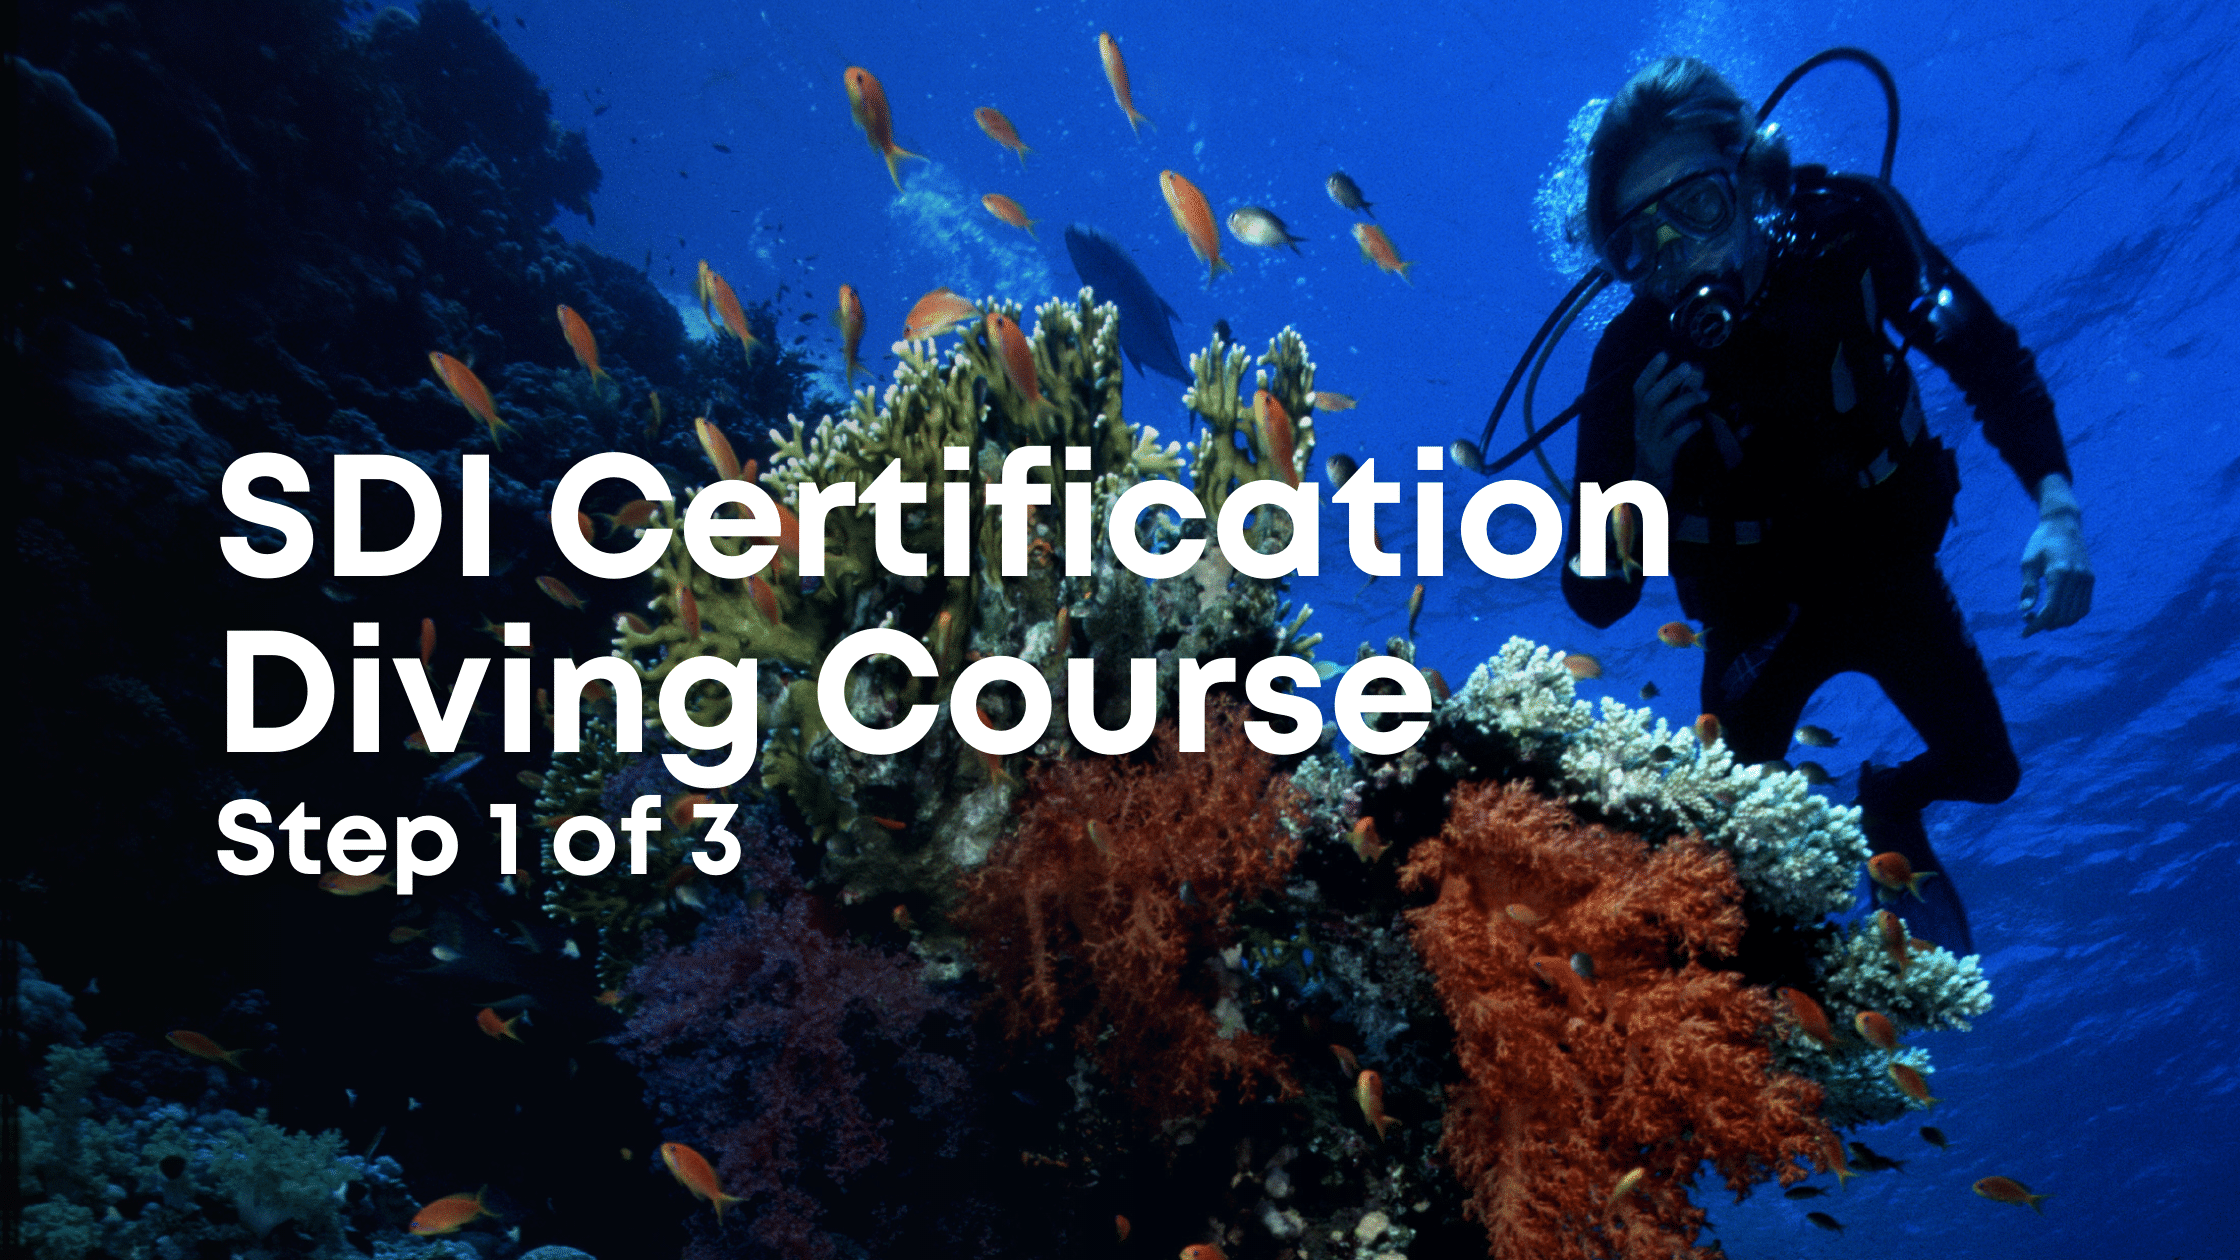 SDI Scuba Diving Certification (Step 1 of 3)